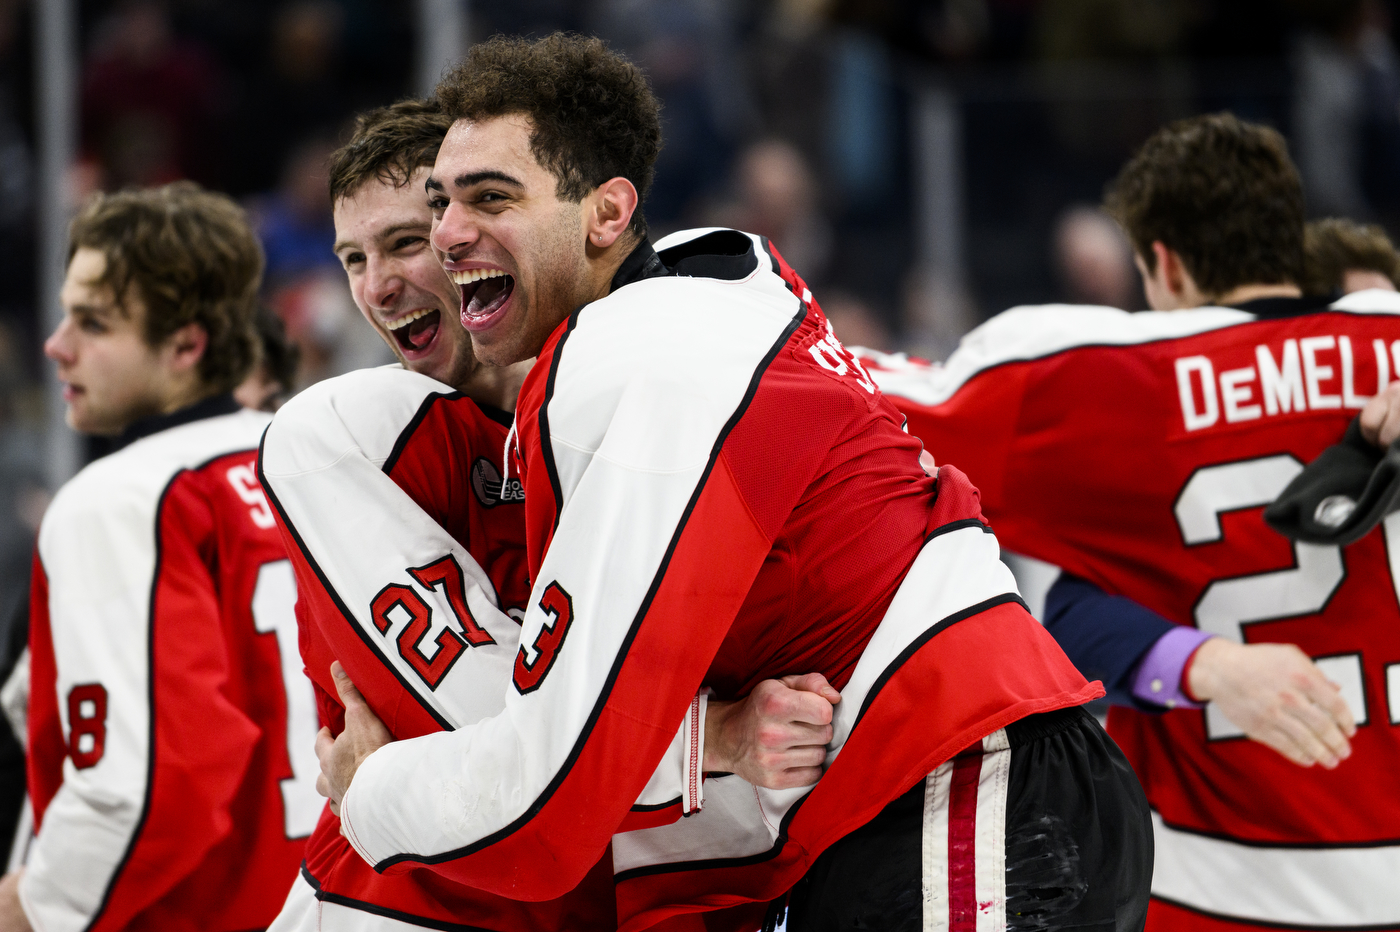 northeastern hockey players celebrating the beanpot win